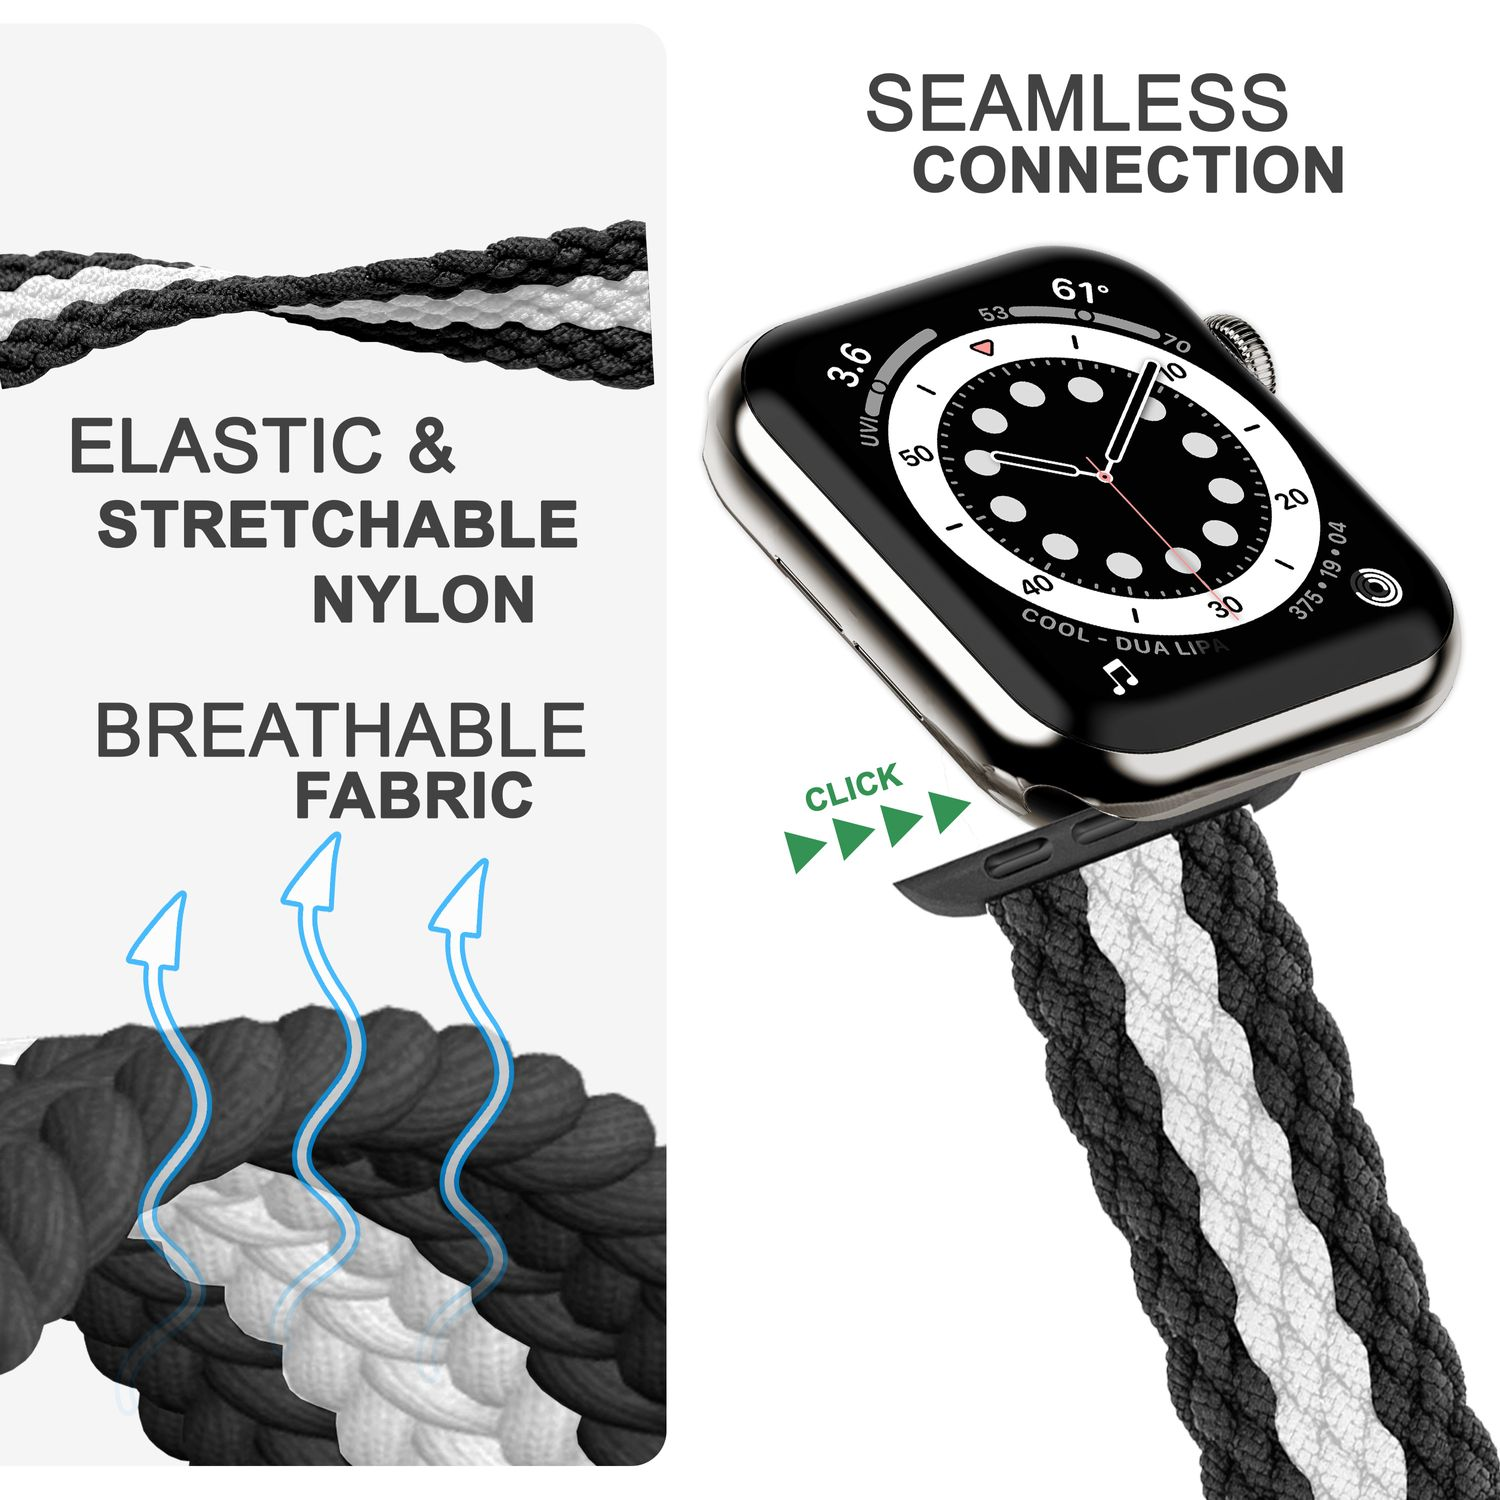 NALIA Geflochtenes Smart-Watch Apple Armband, Ersatzarmband, Watch Schwarz Apple, Weiß 42mm/44mm/45mm/49mm